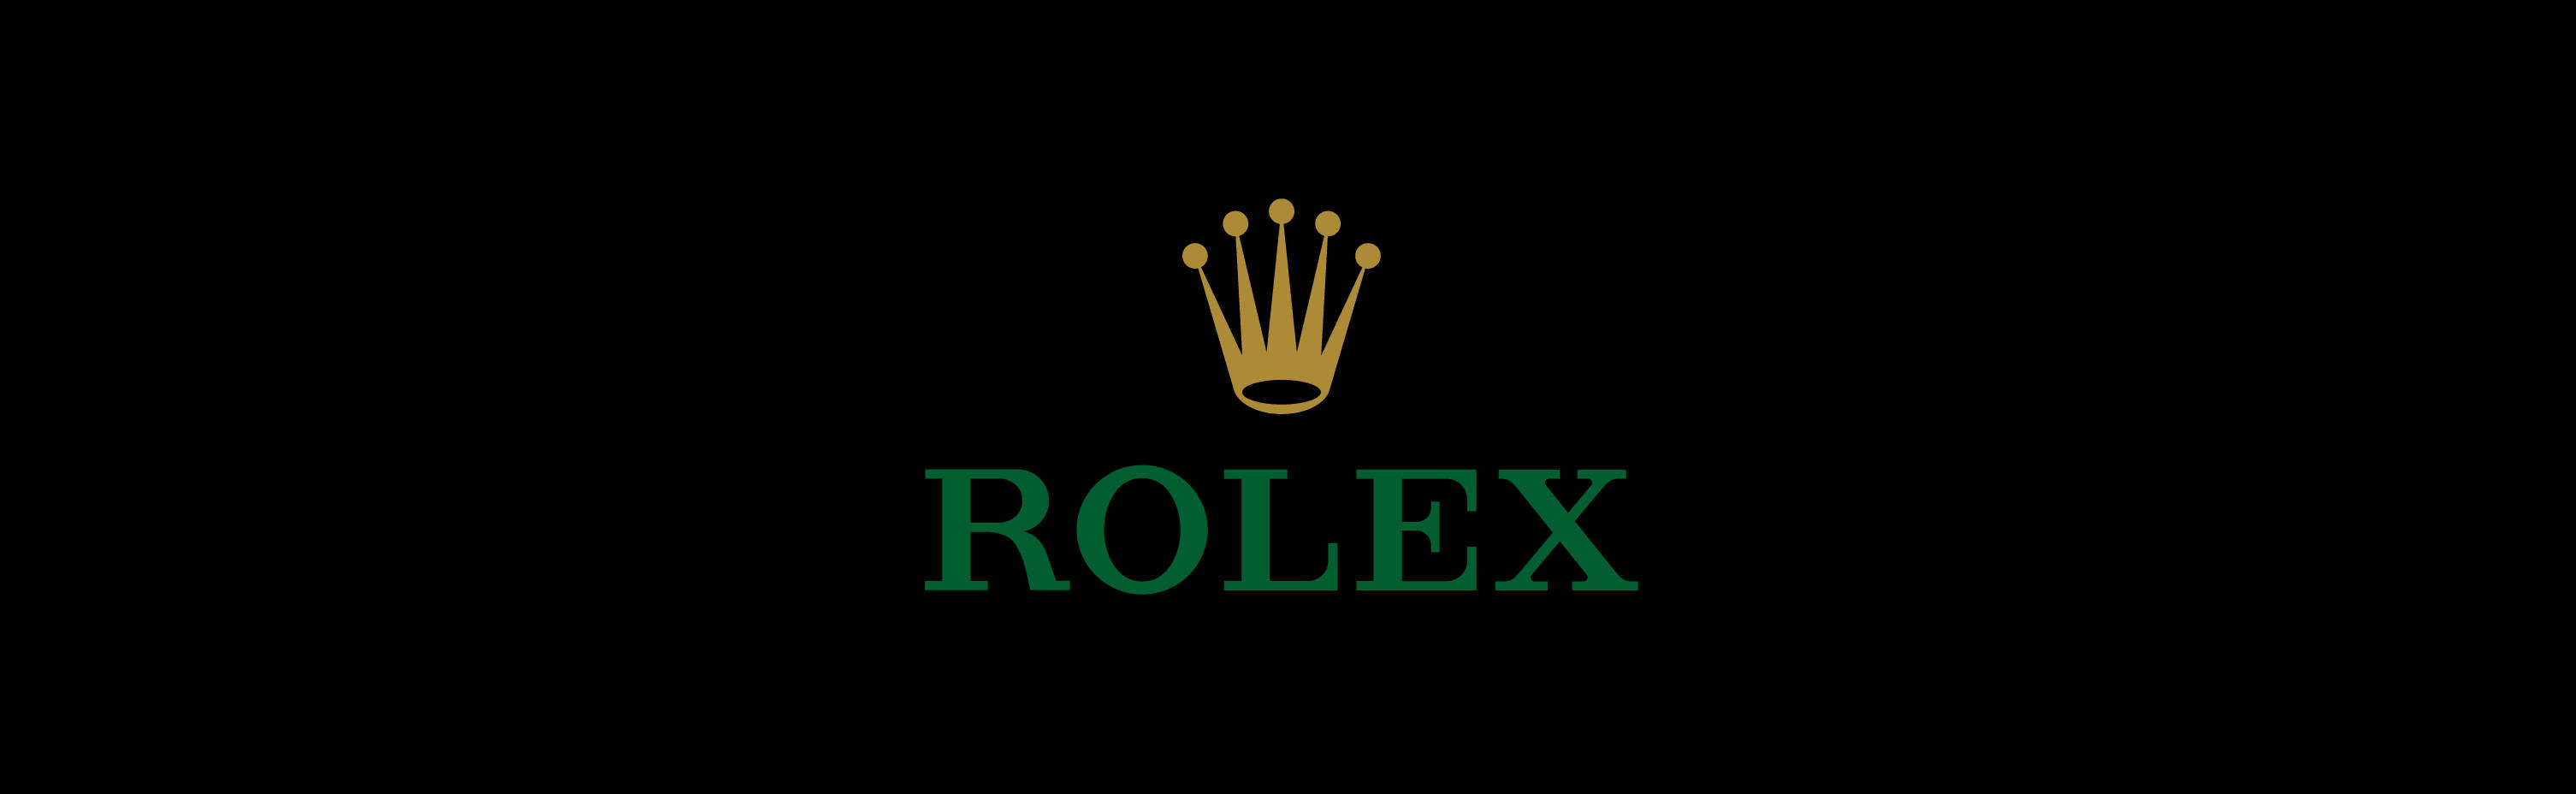 Iconic Green Rolex Logo Wallpaper